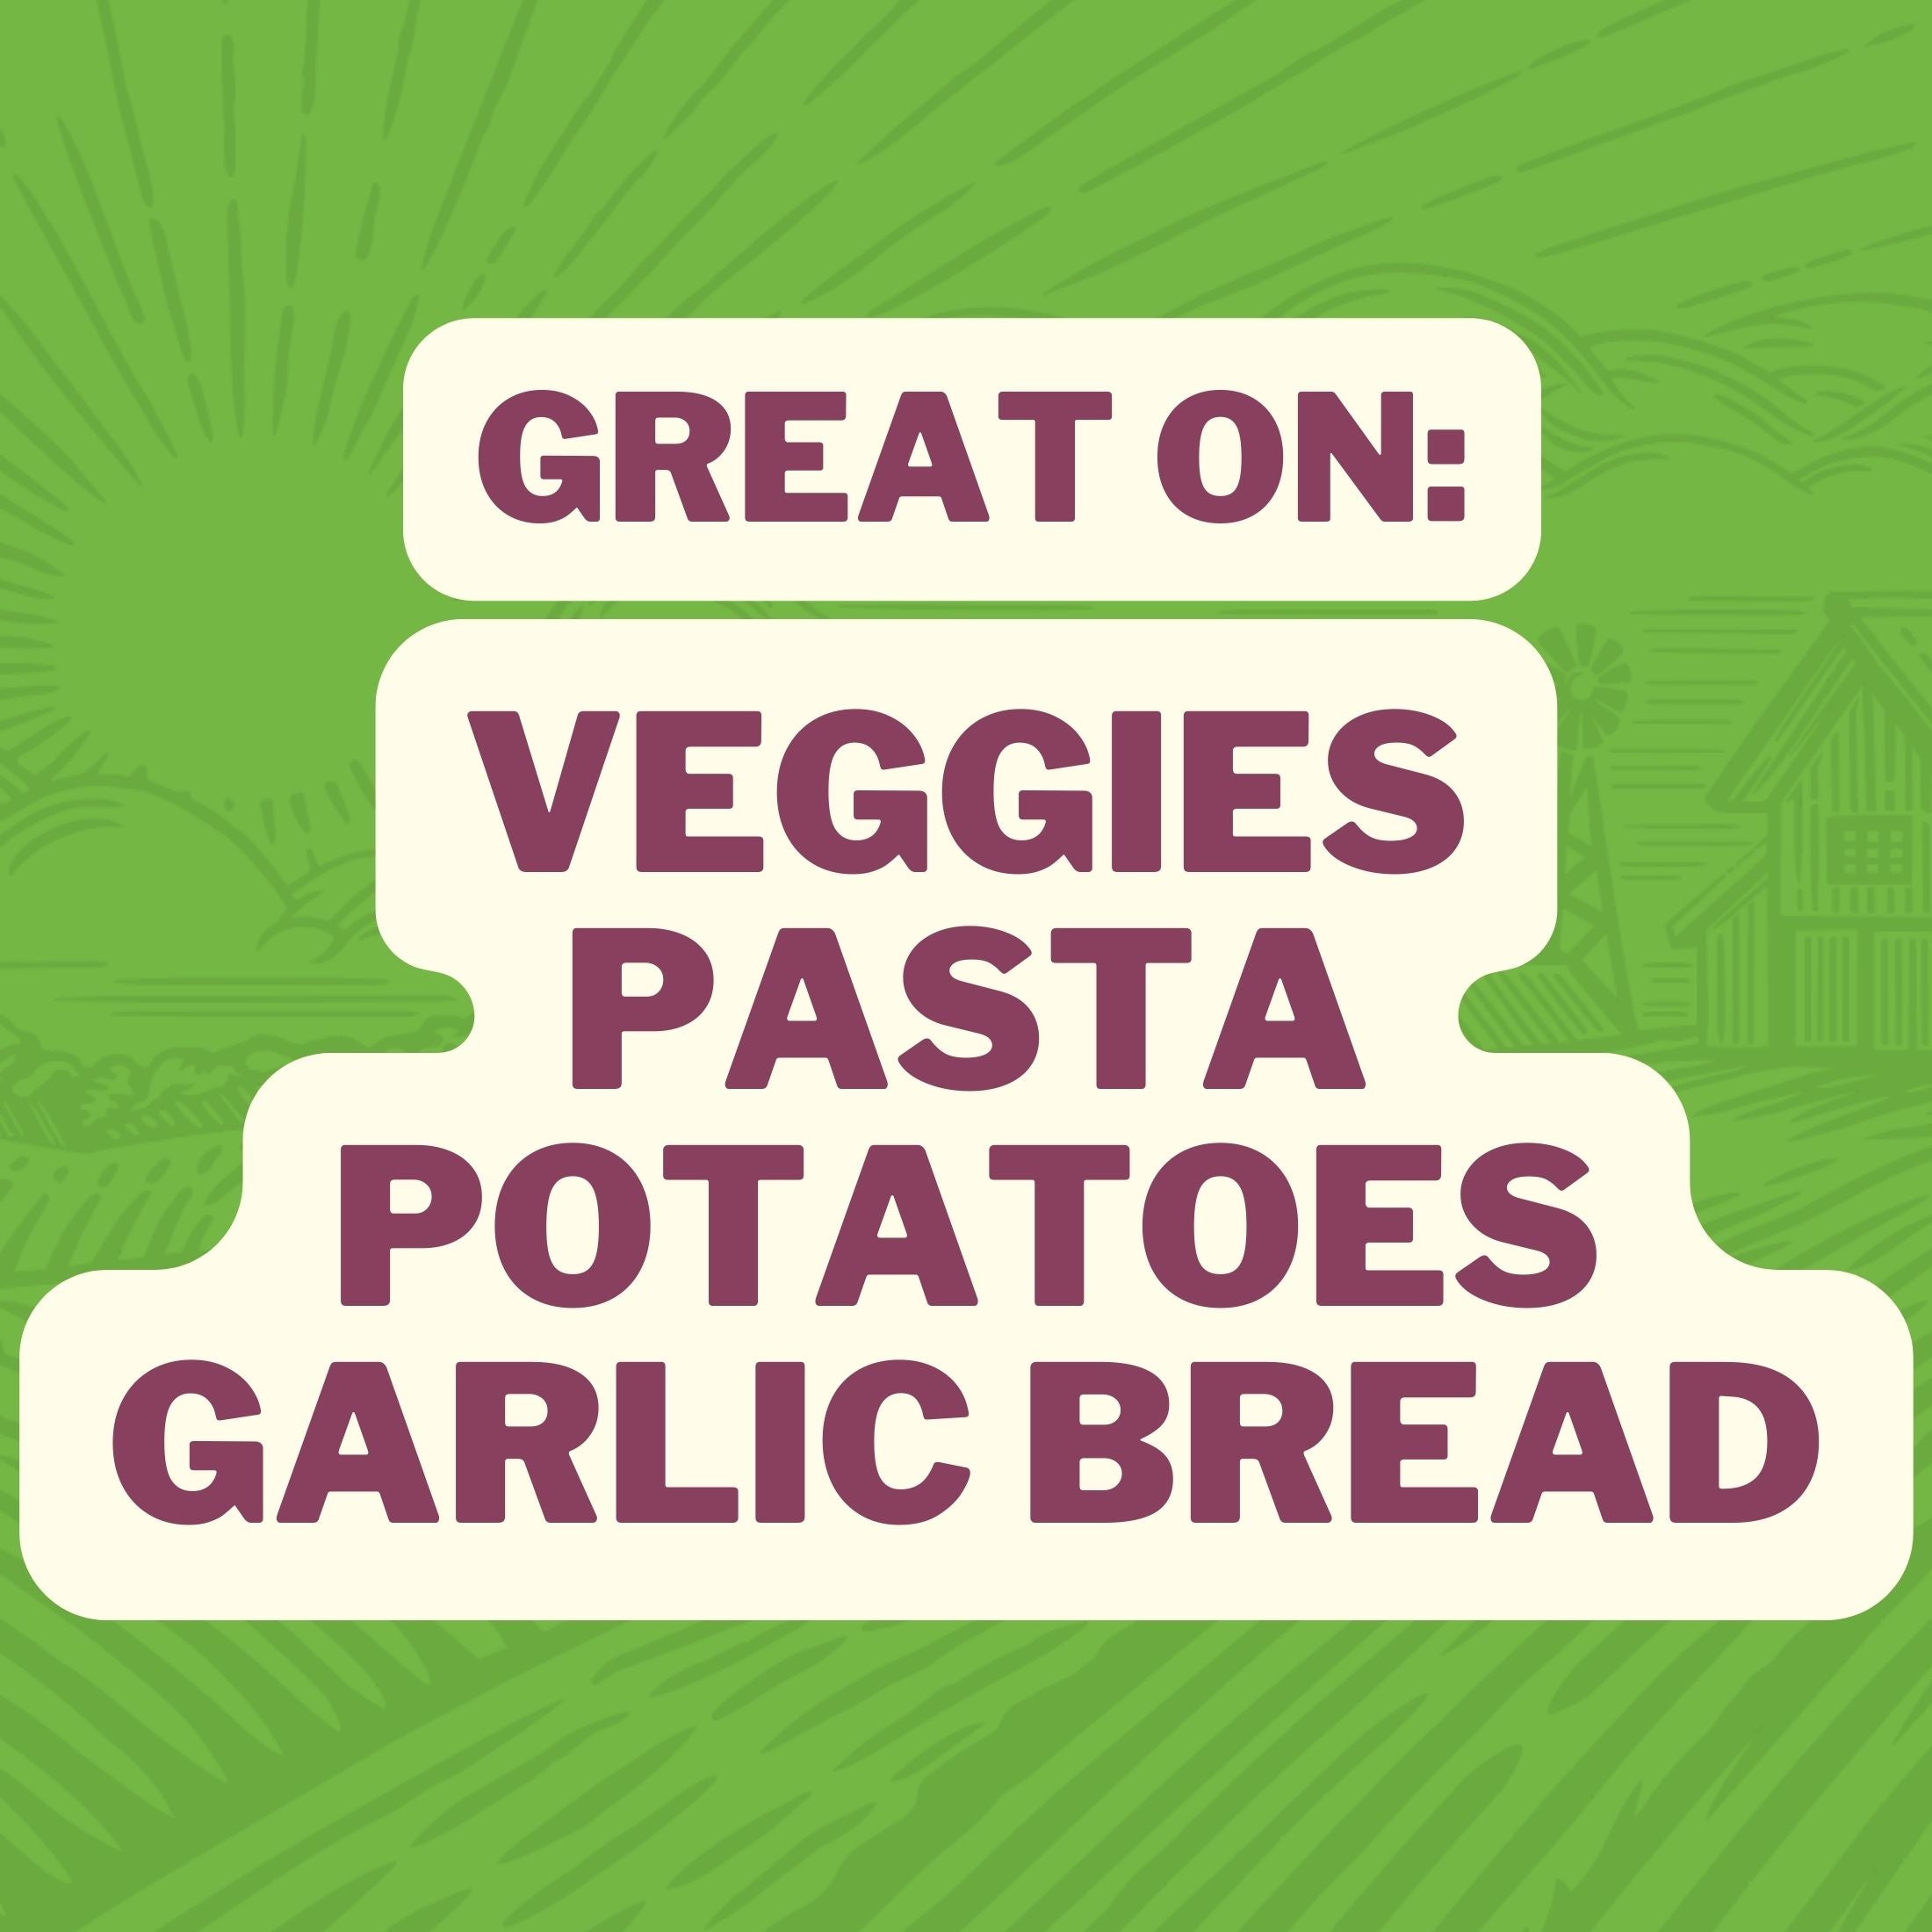 Garlic Herb is Great On: Veggies, Pasta, Potatoes, Garlic Bread 